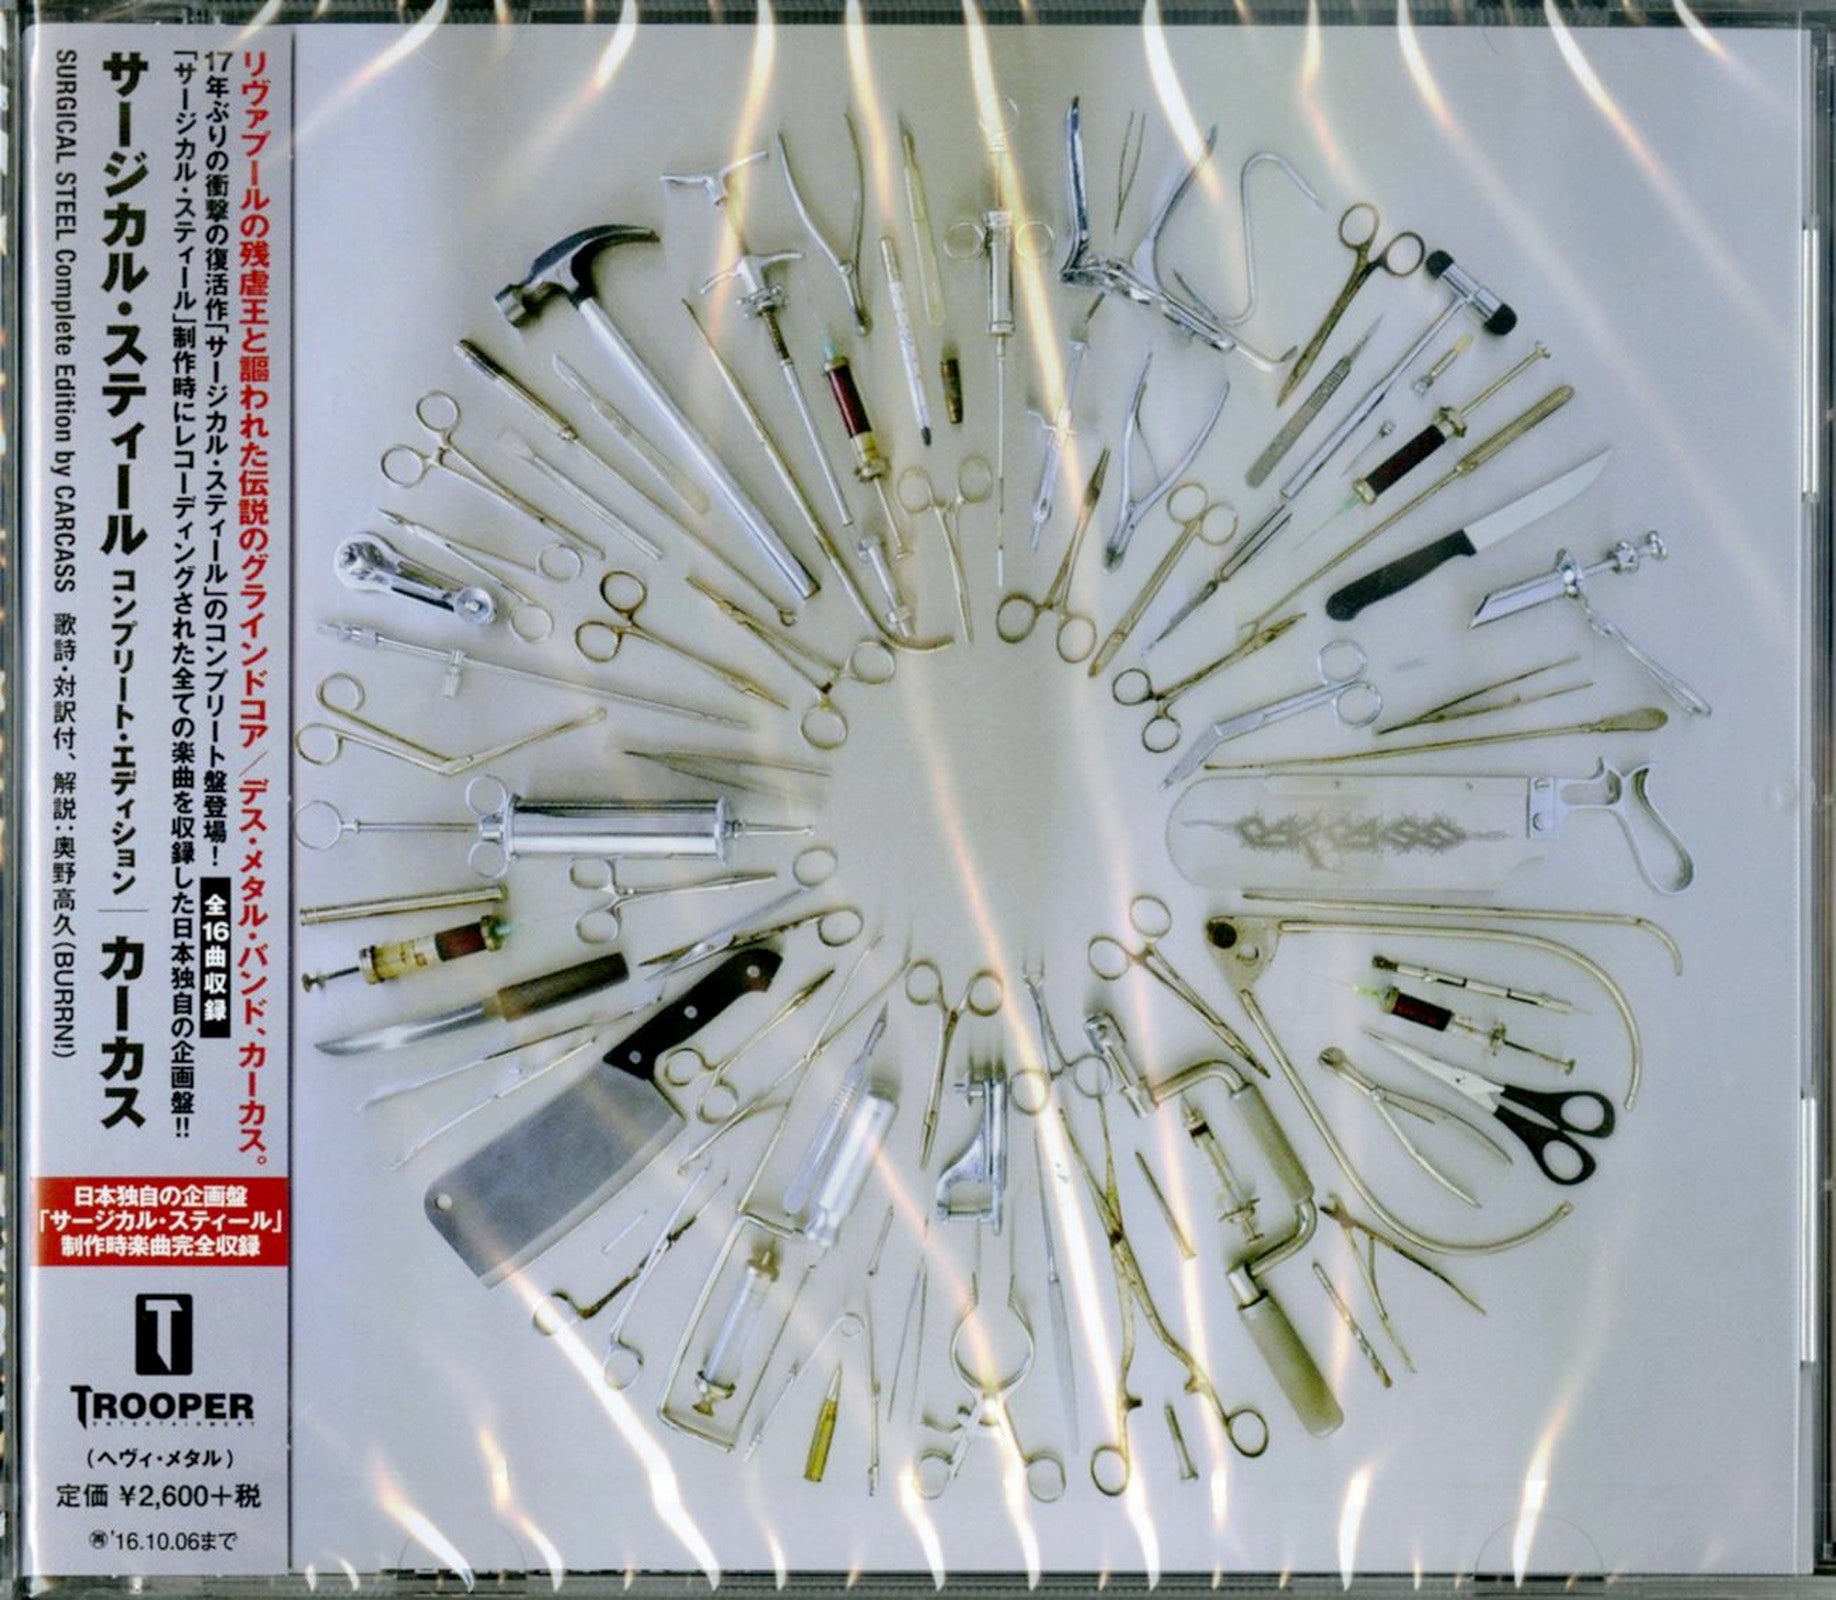 Carcass - Surgical Steel Complete Edition - Japan CD Bonus Track – CDs  Vinyl Japan Store